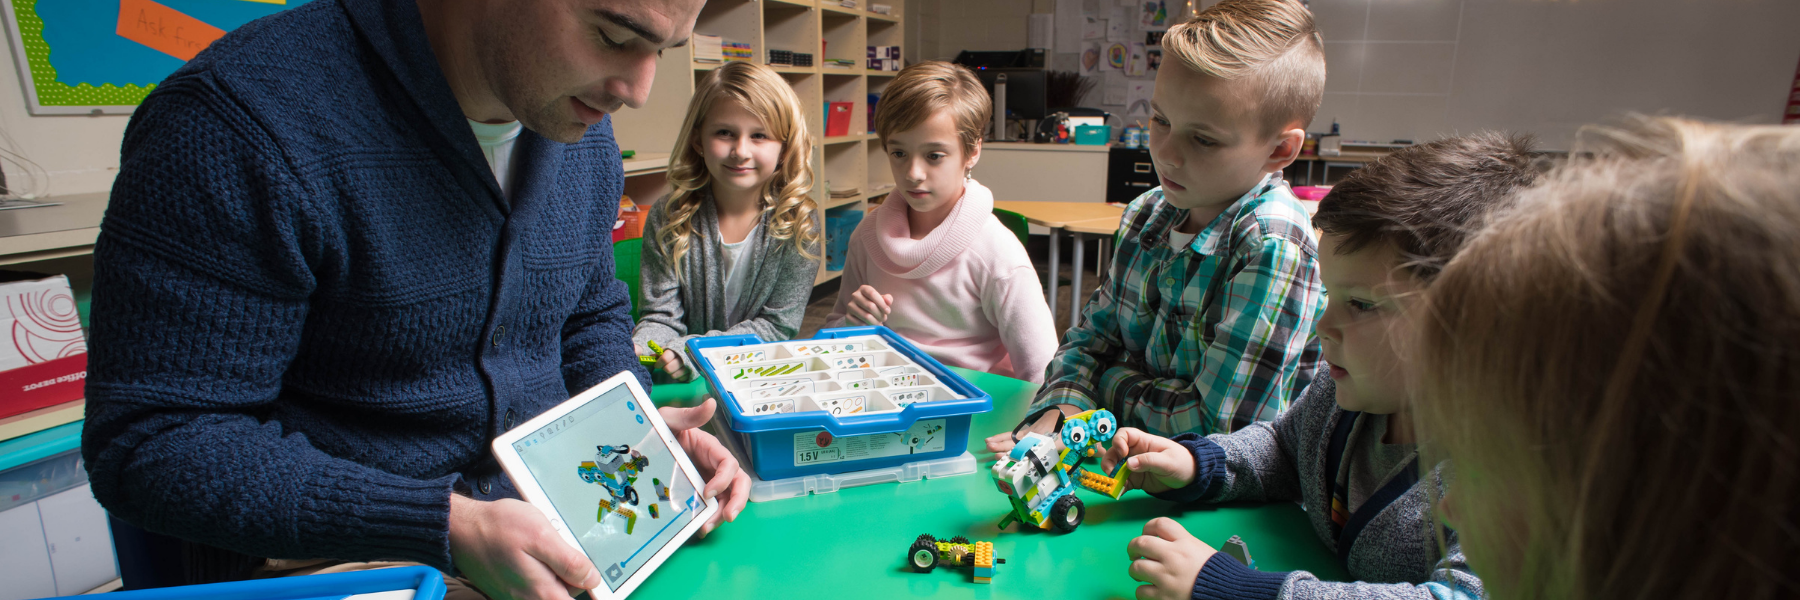 A teacher and students work through a coding problem using robotics materials and an iPad.